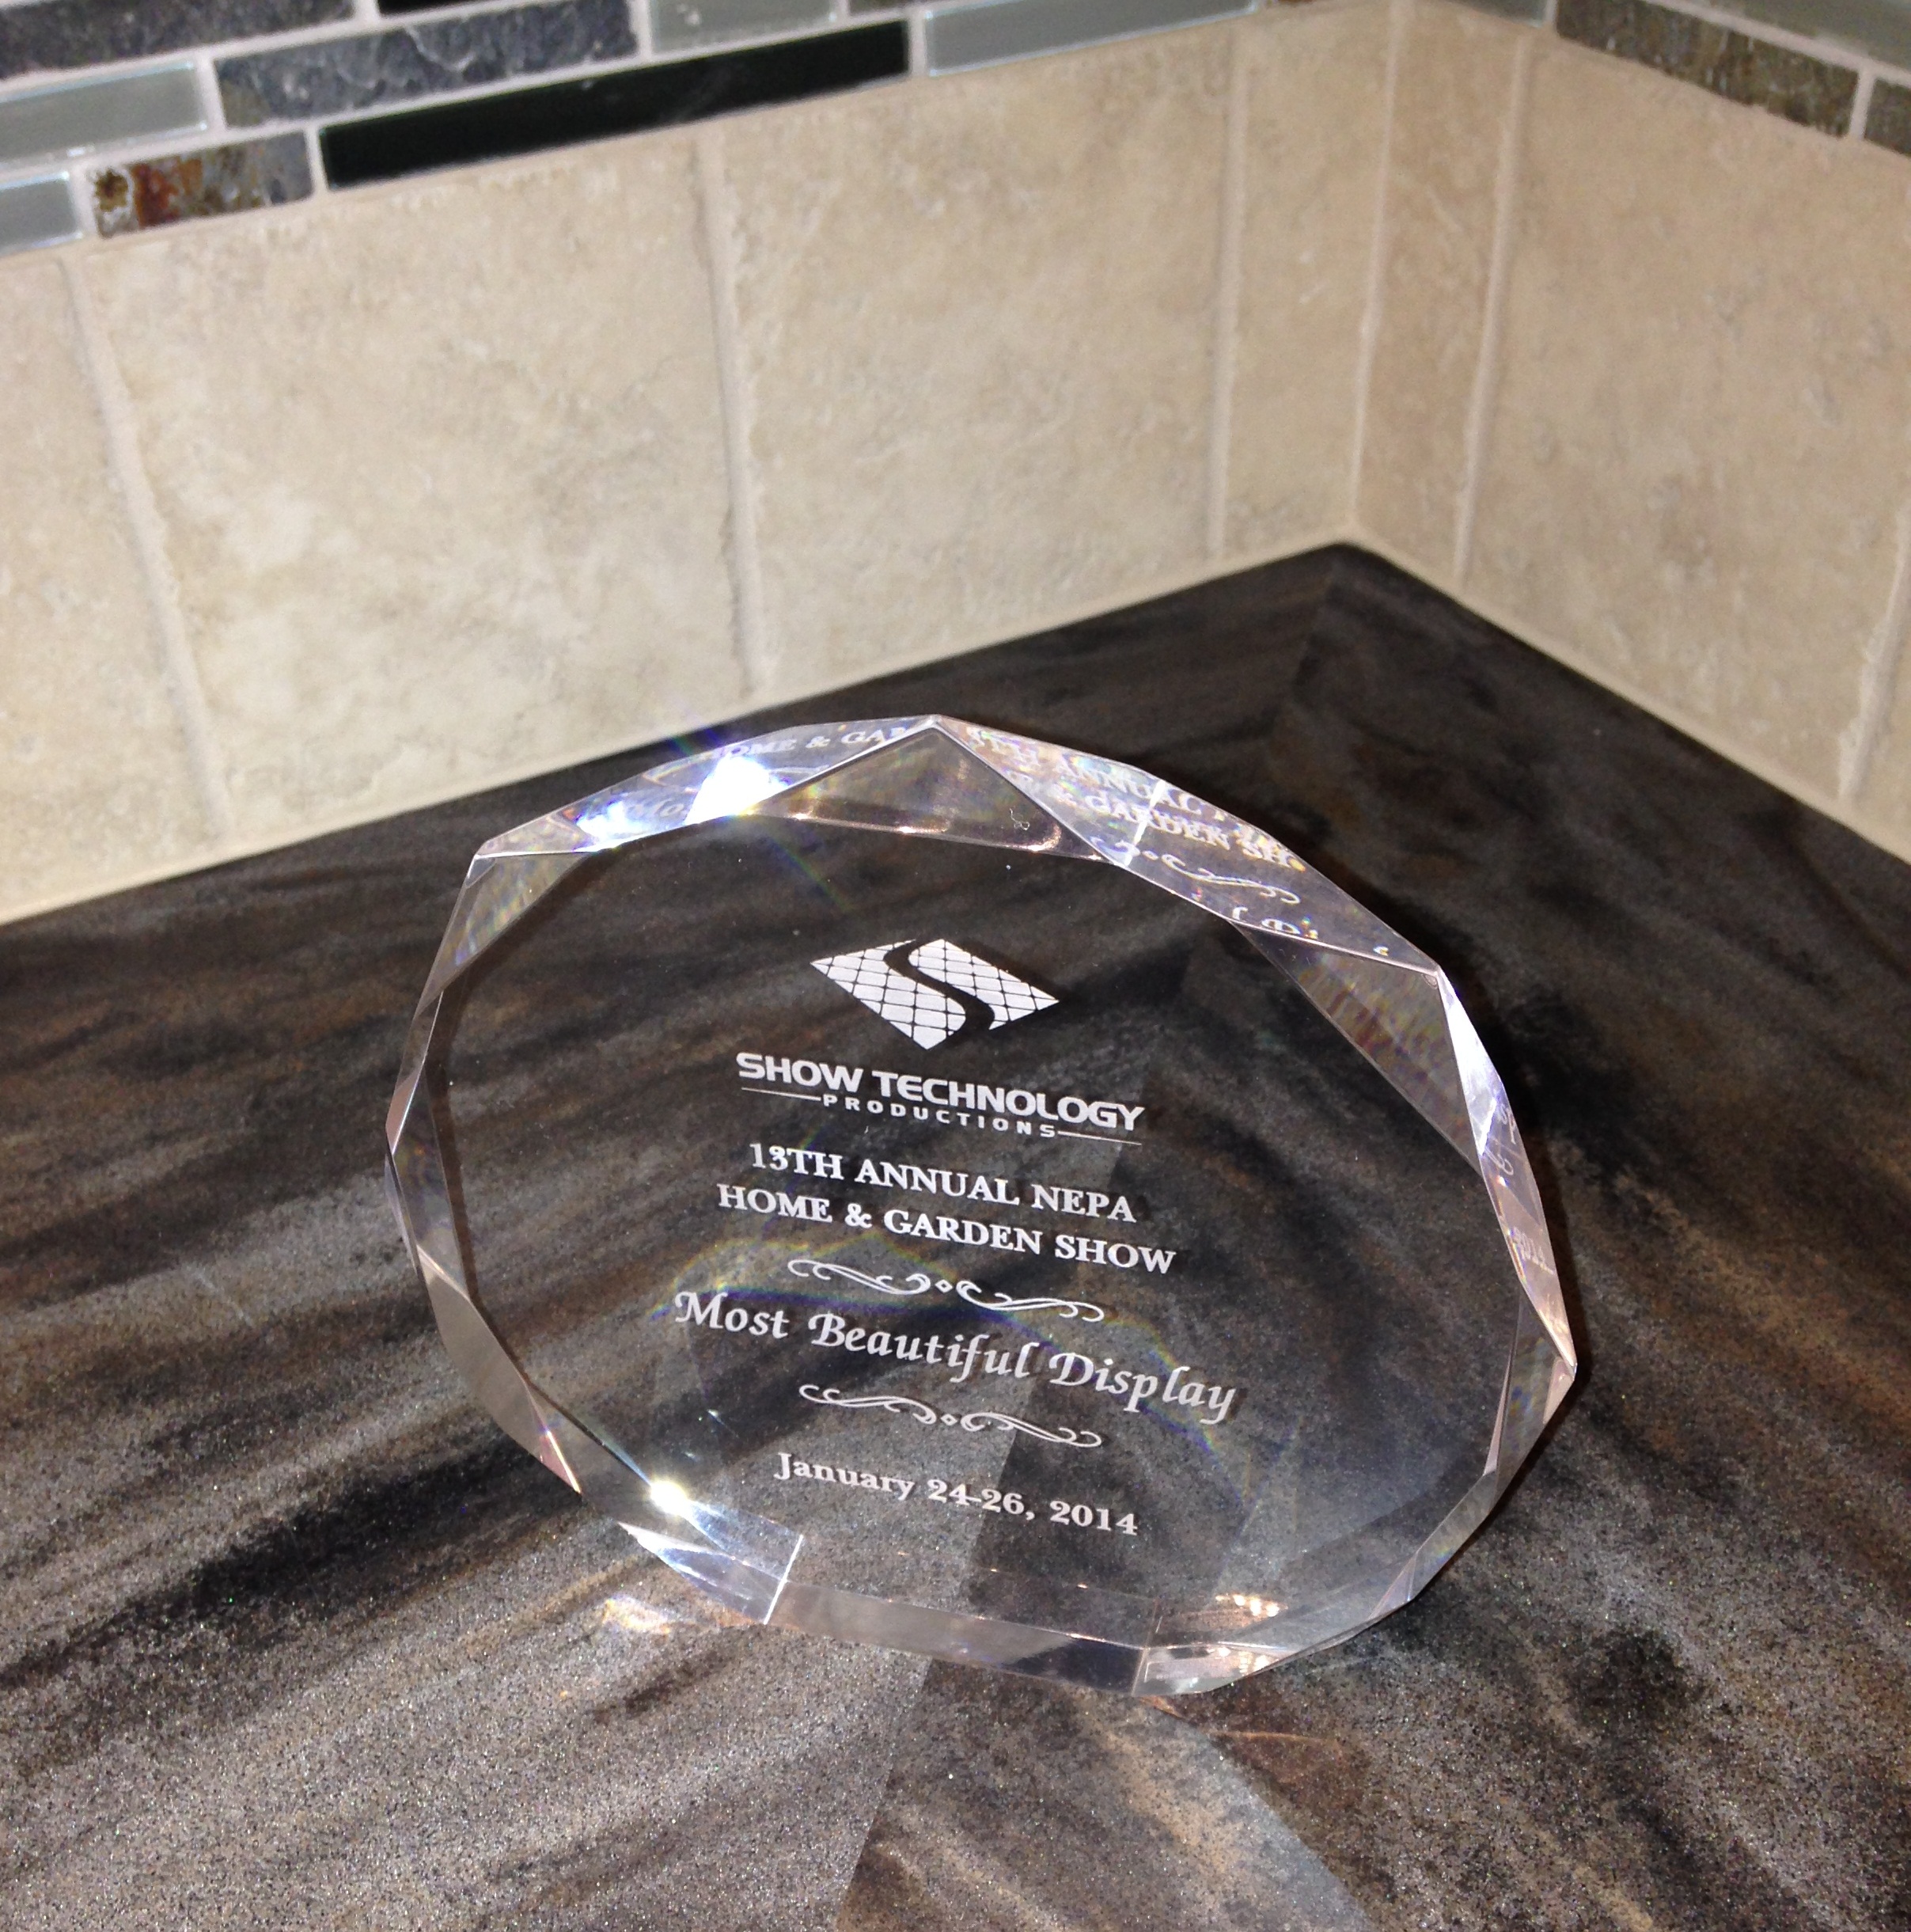 Most beautiful display award give to 1 Week Kitchens Jan 2014.